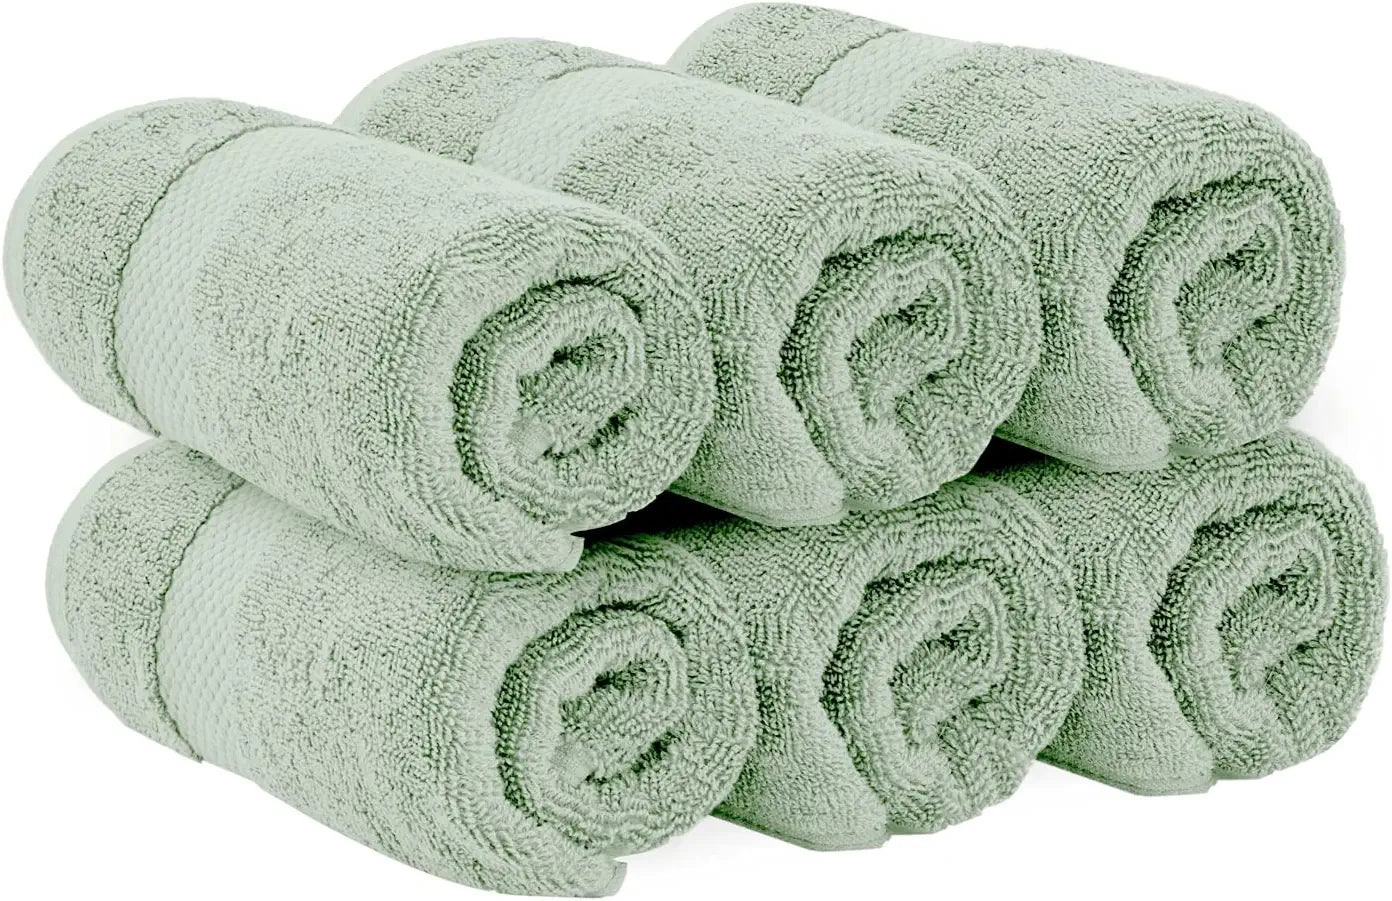 Luxury Hand Towels - Luxury Hotel Hand Towels Wholesale